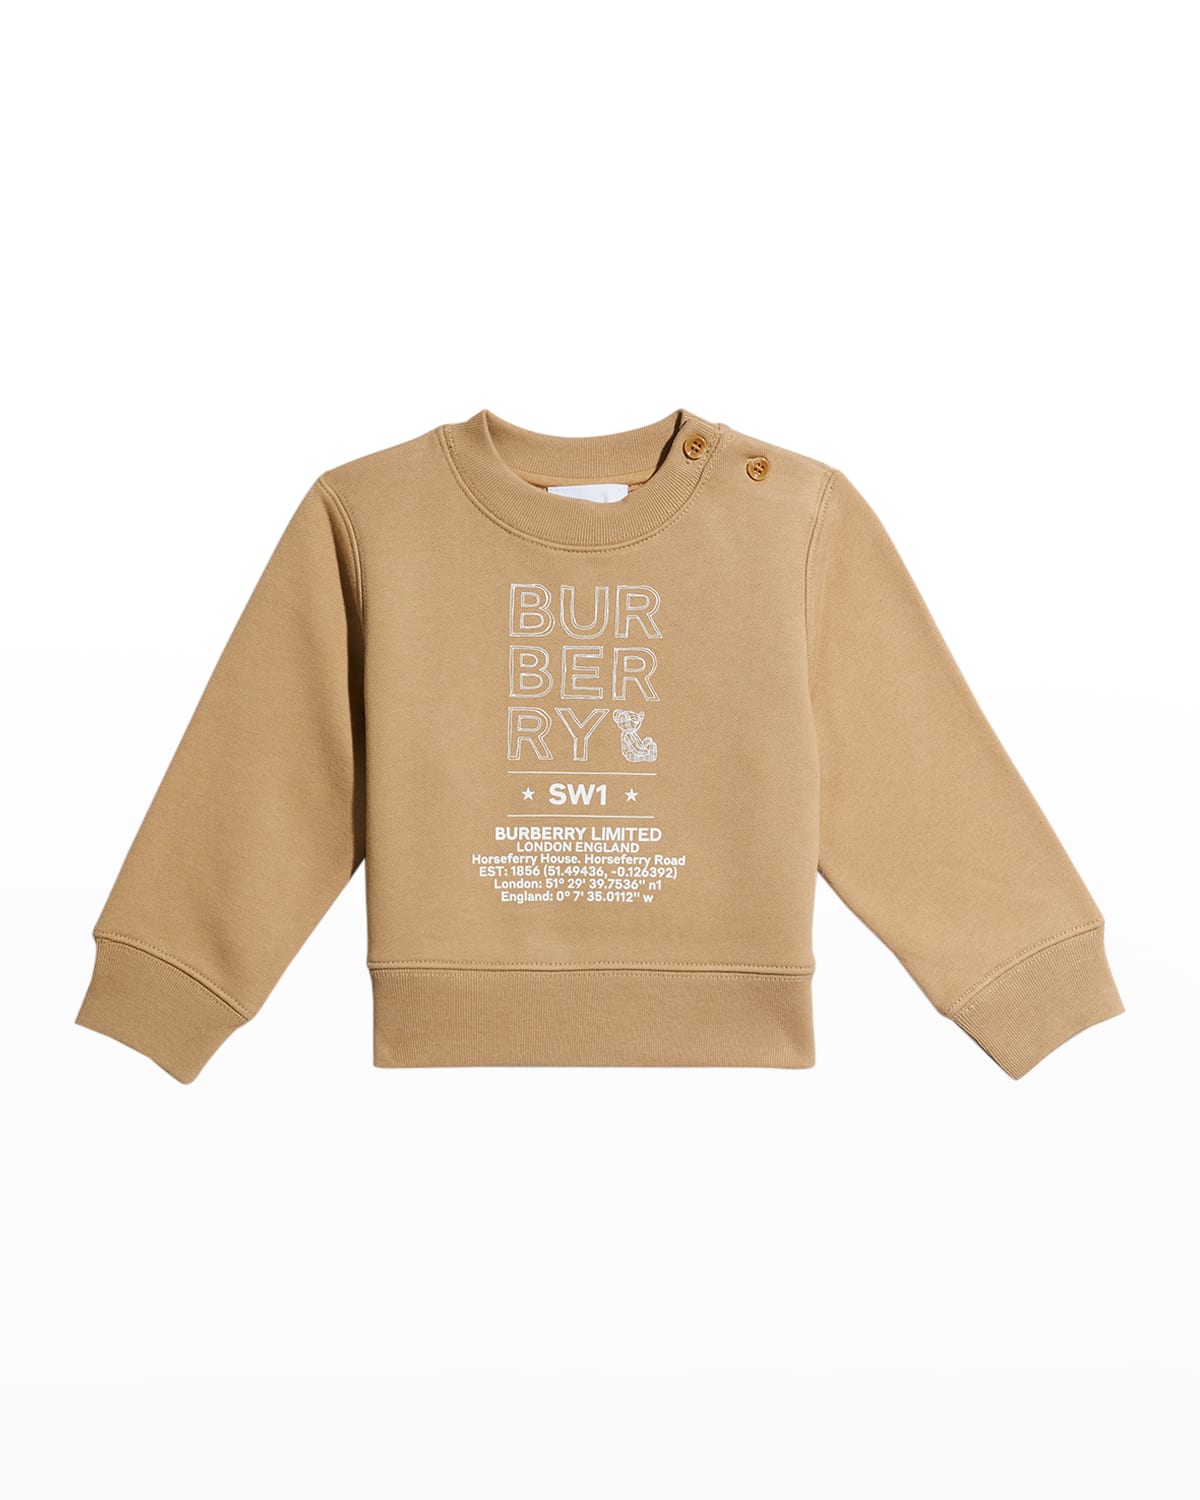 Burberry Boy's Embroidered Teddy Sweatshirt, Size 6M-2 | Neiman Marcus